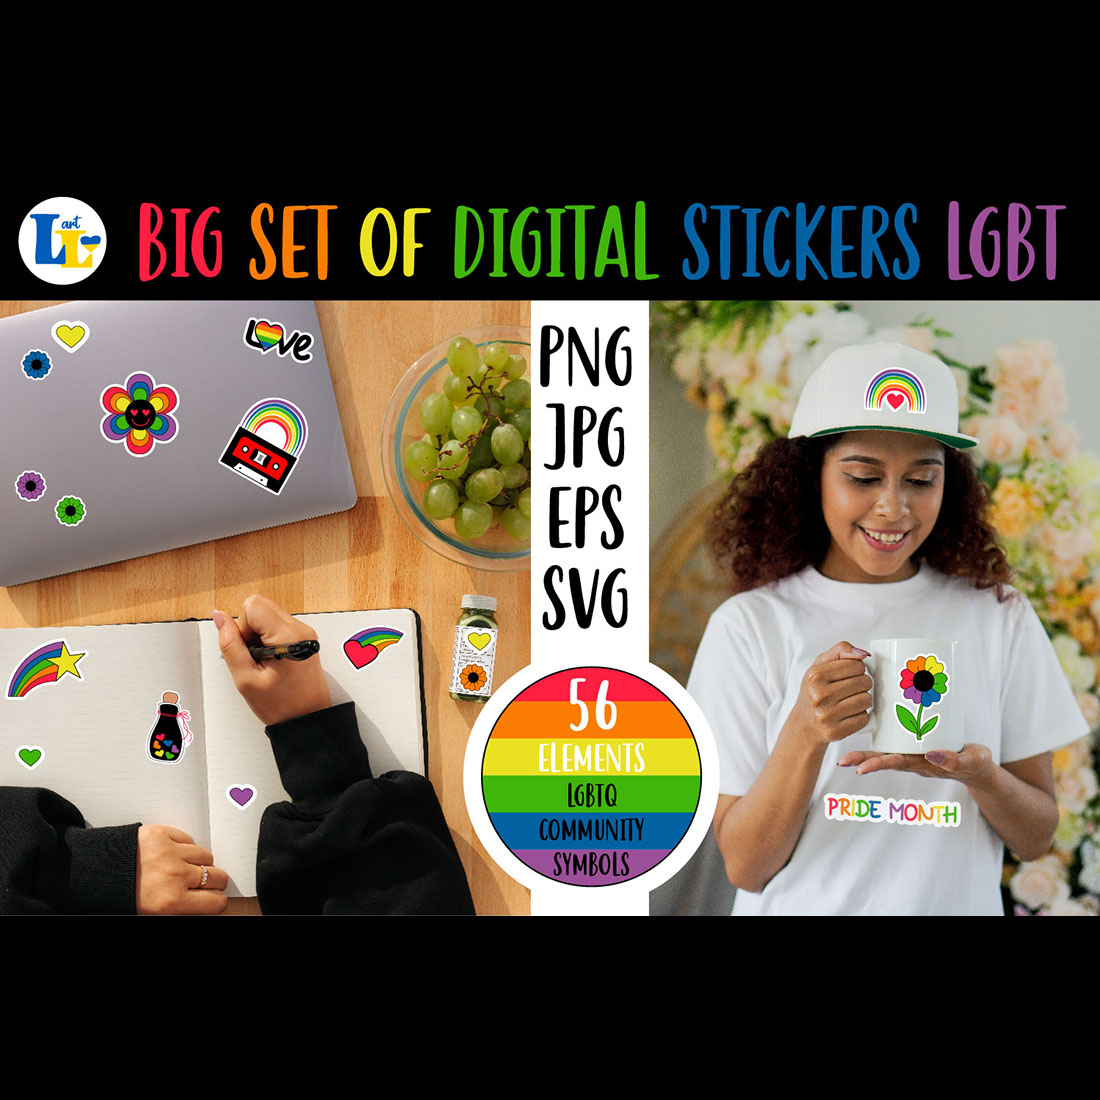 LGBTQ Community Symbols Daily Planner Digital Stickers Facebook Image.